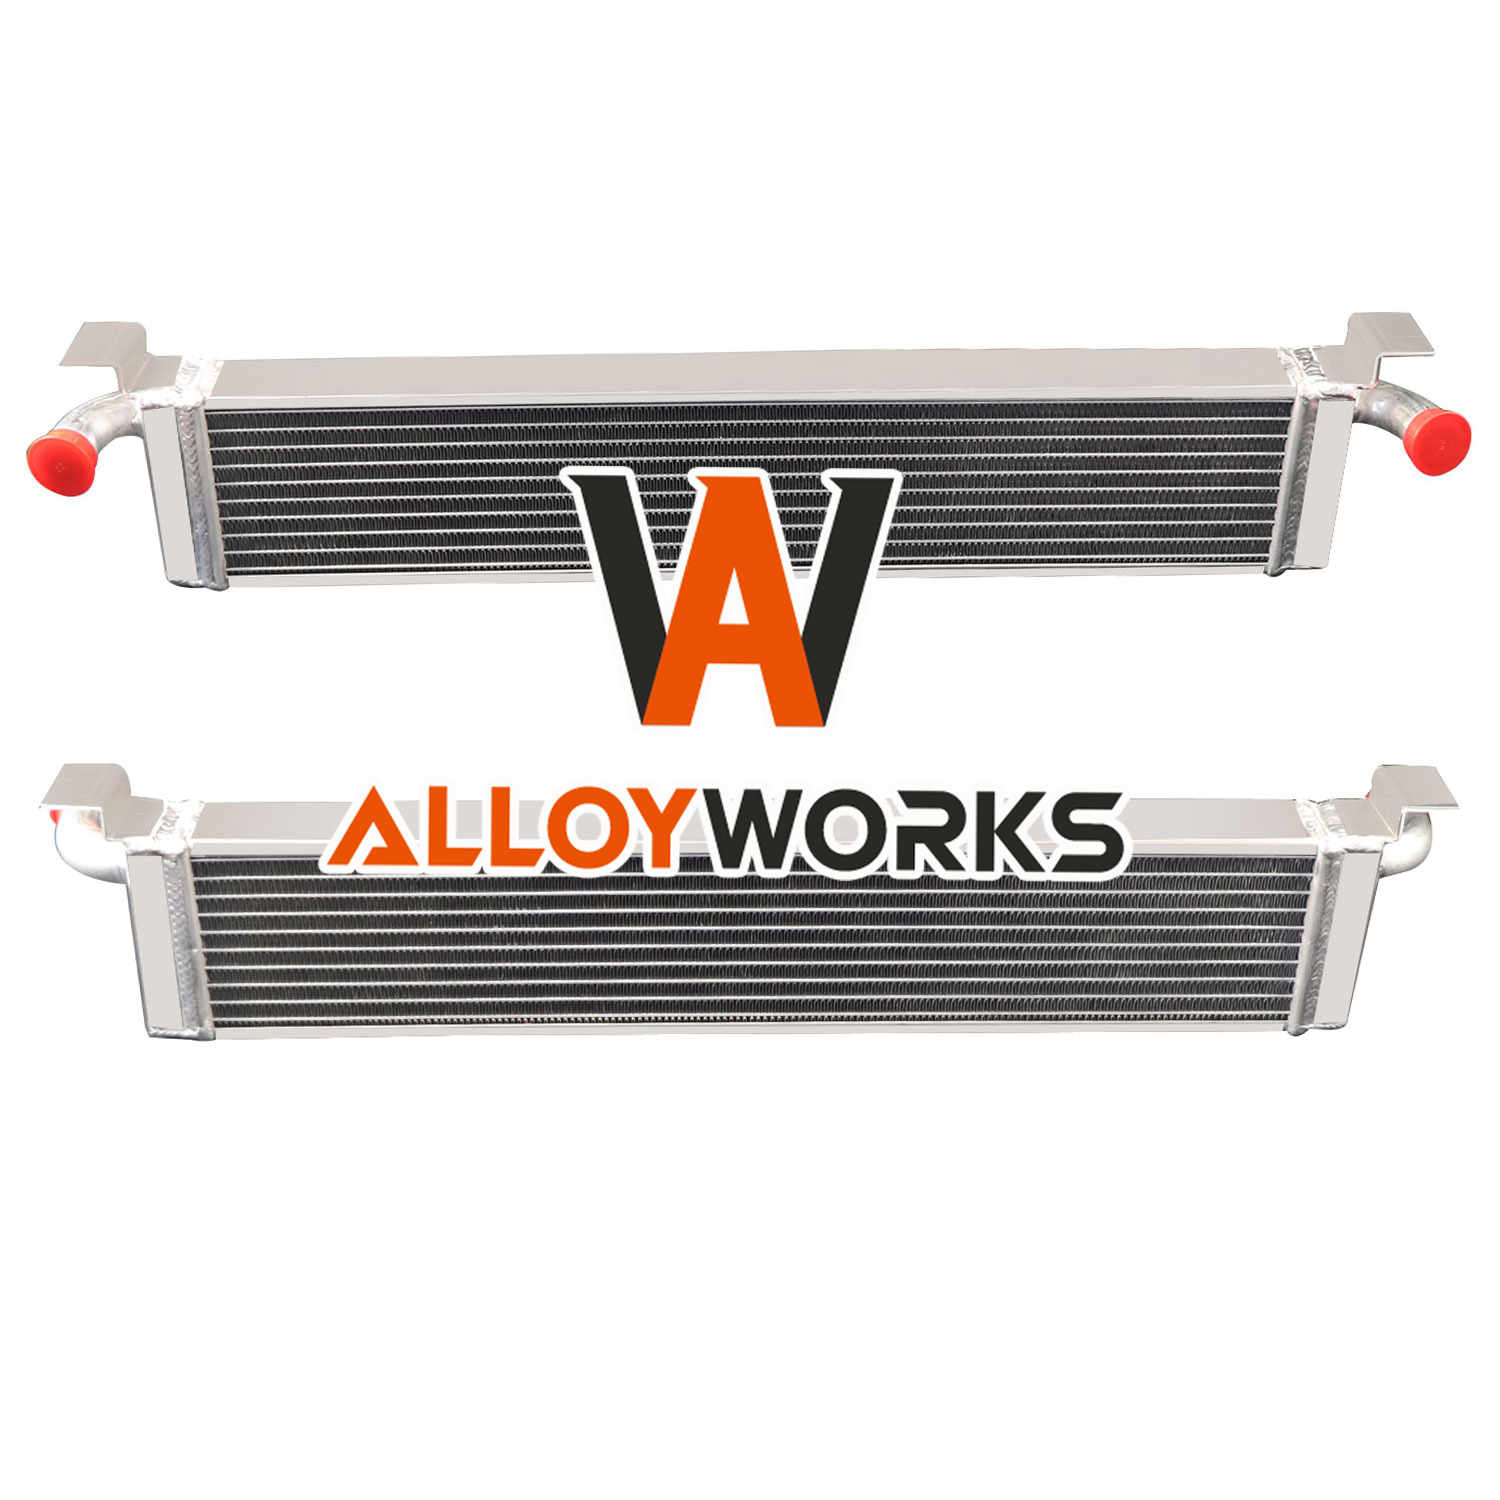 2 Row Radiator For Kitfox w/Rotax 532/582, 618, 670 2-stroke engine